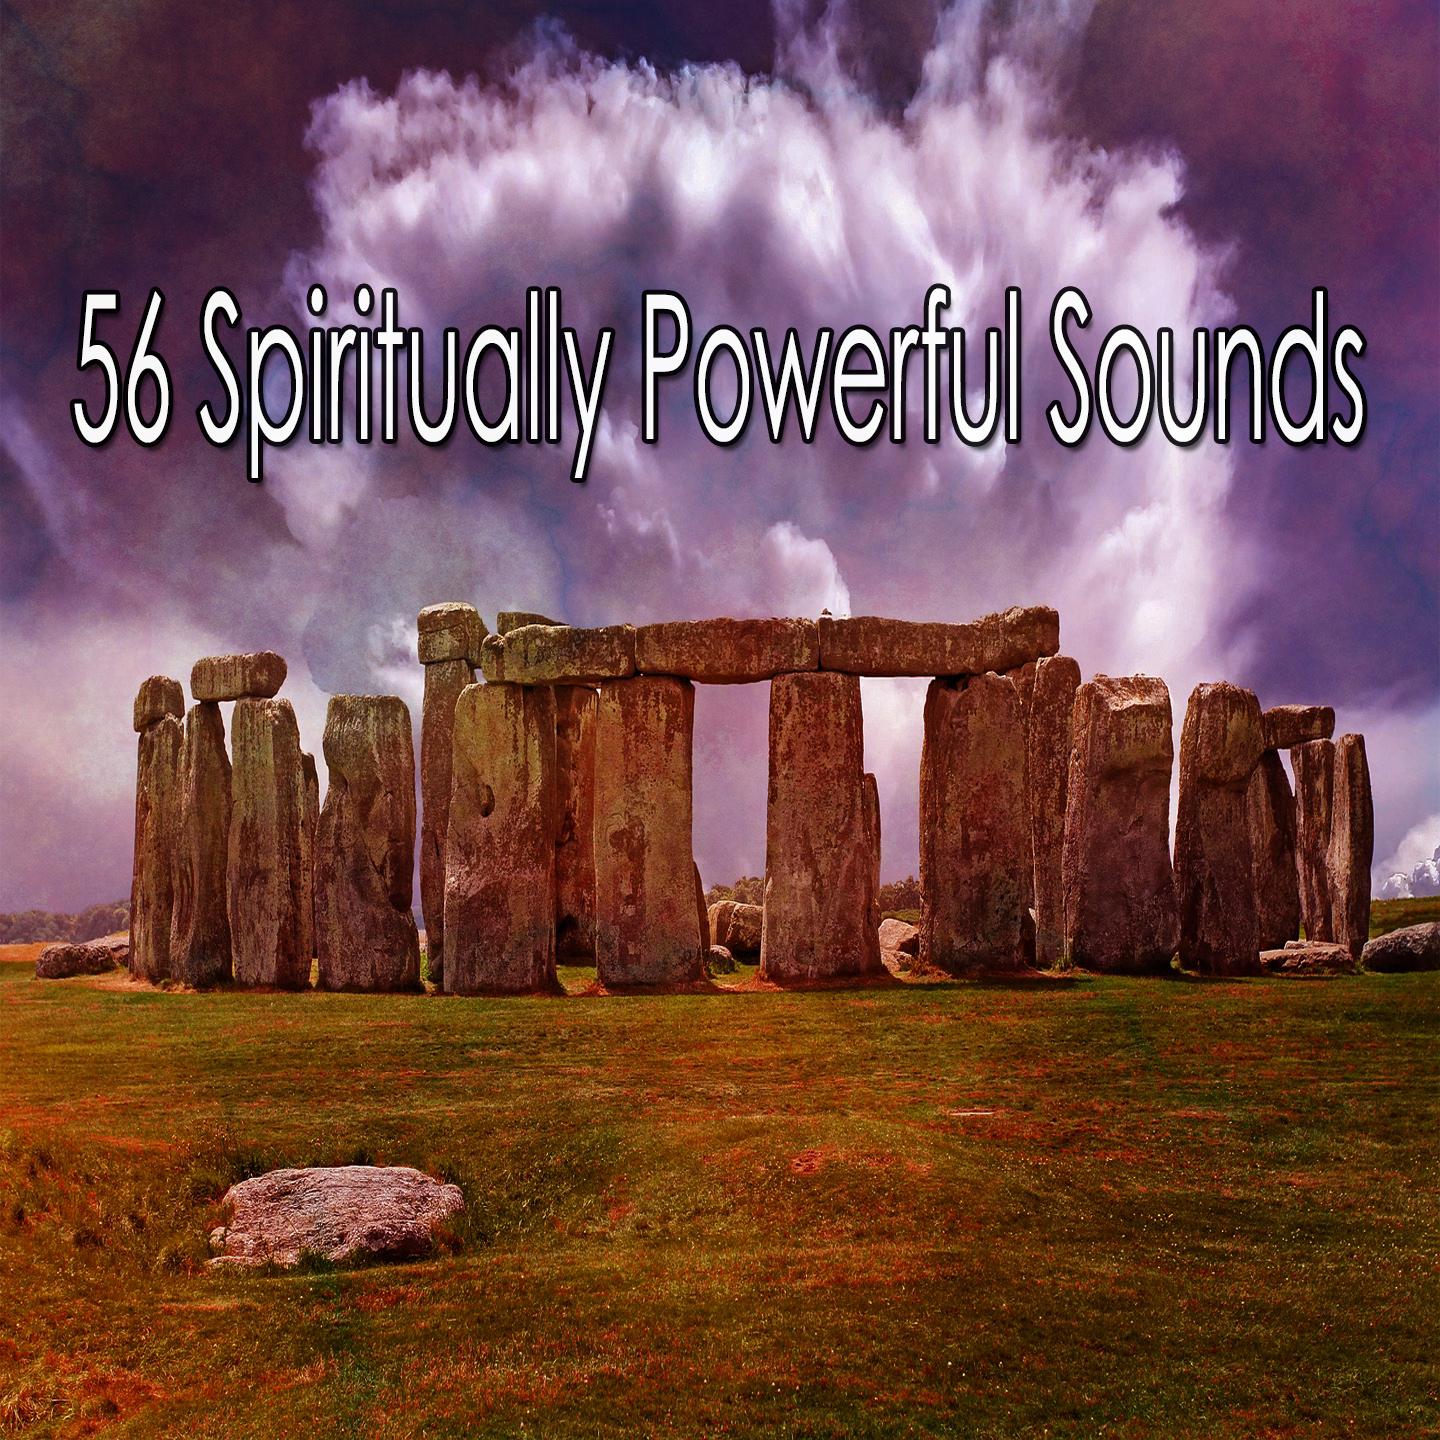 56 Spiritually Powerful Sounds